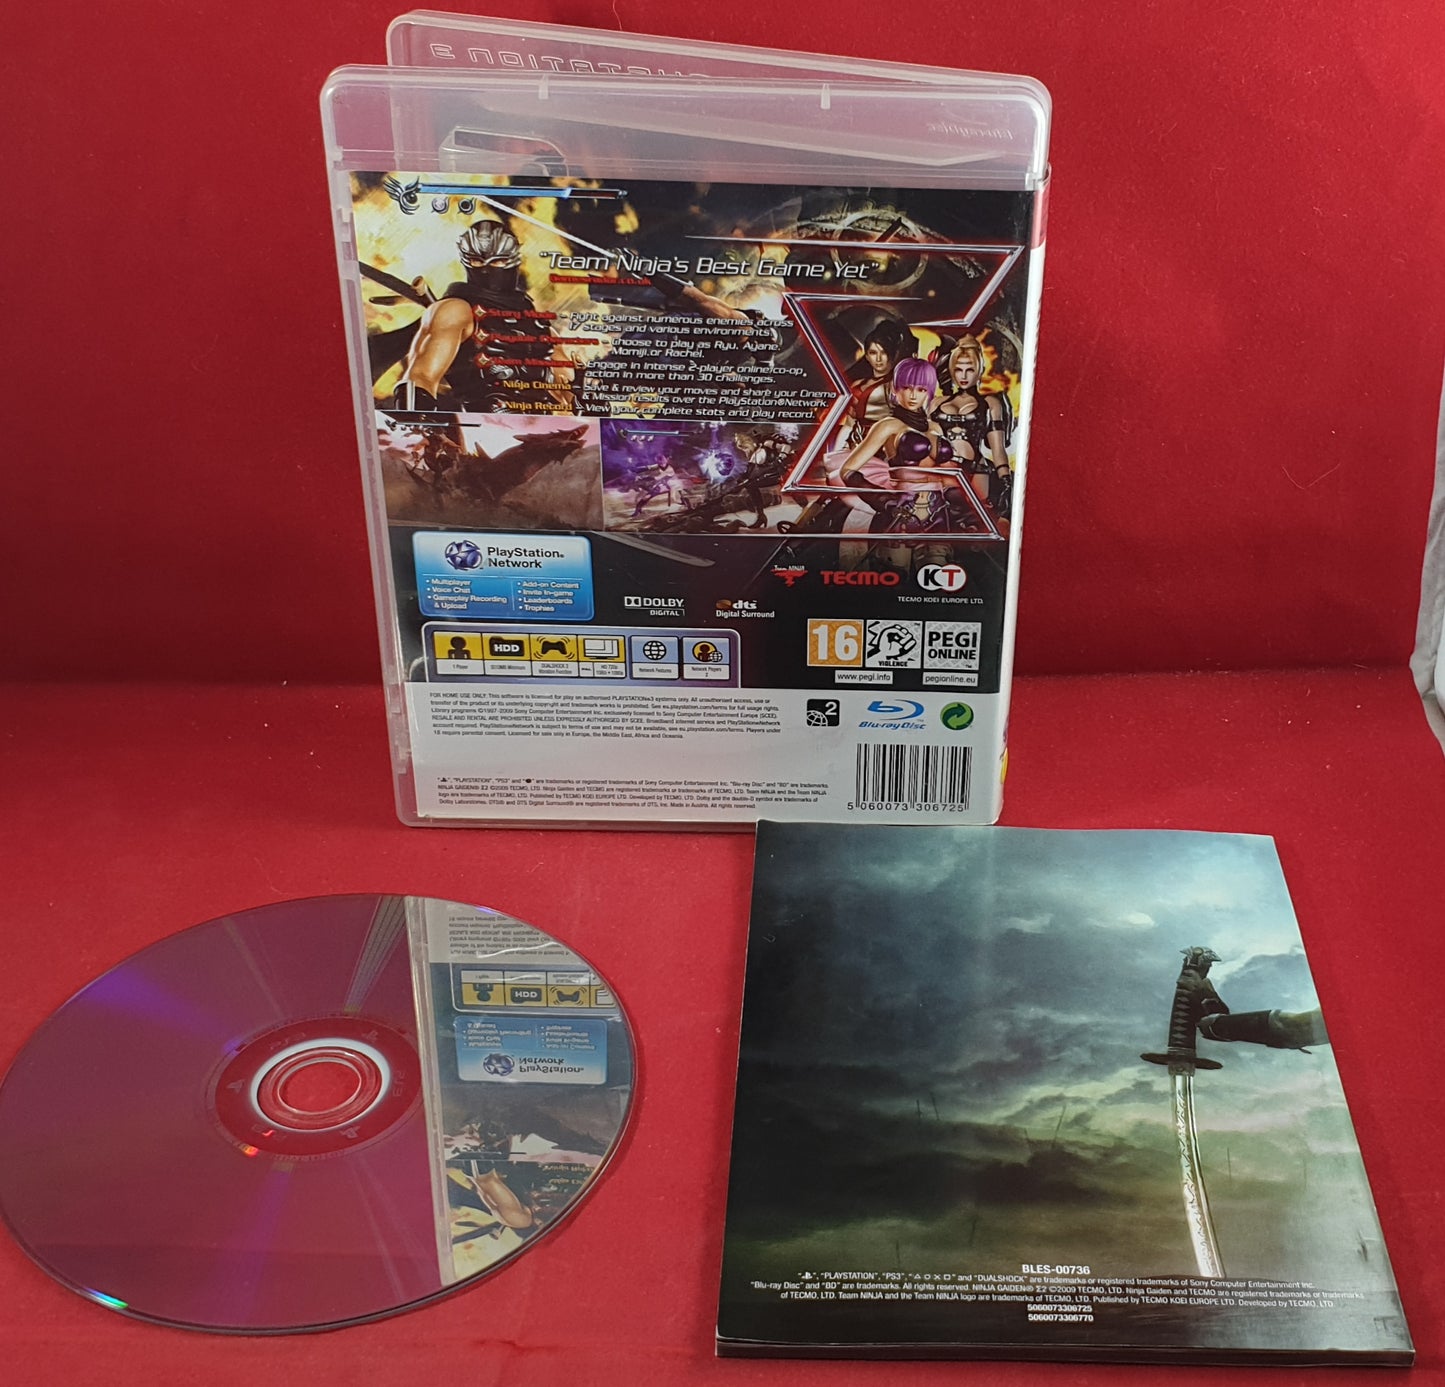 Ninja Gaiden Sigma 2 Sony Playstation 3 (PS3) Game